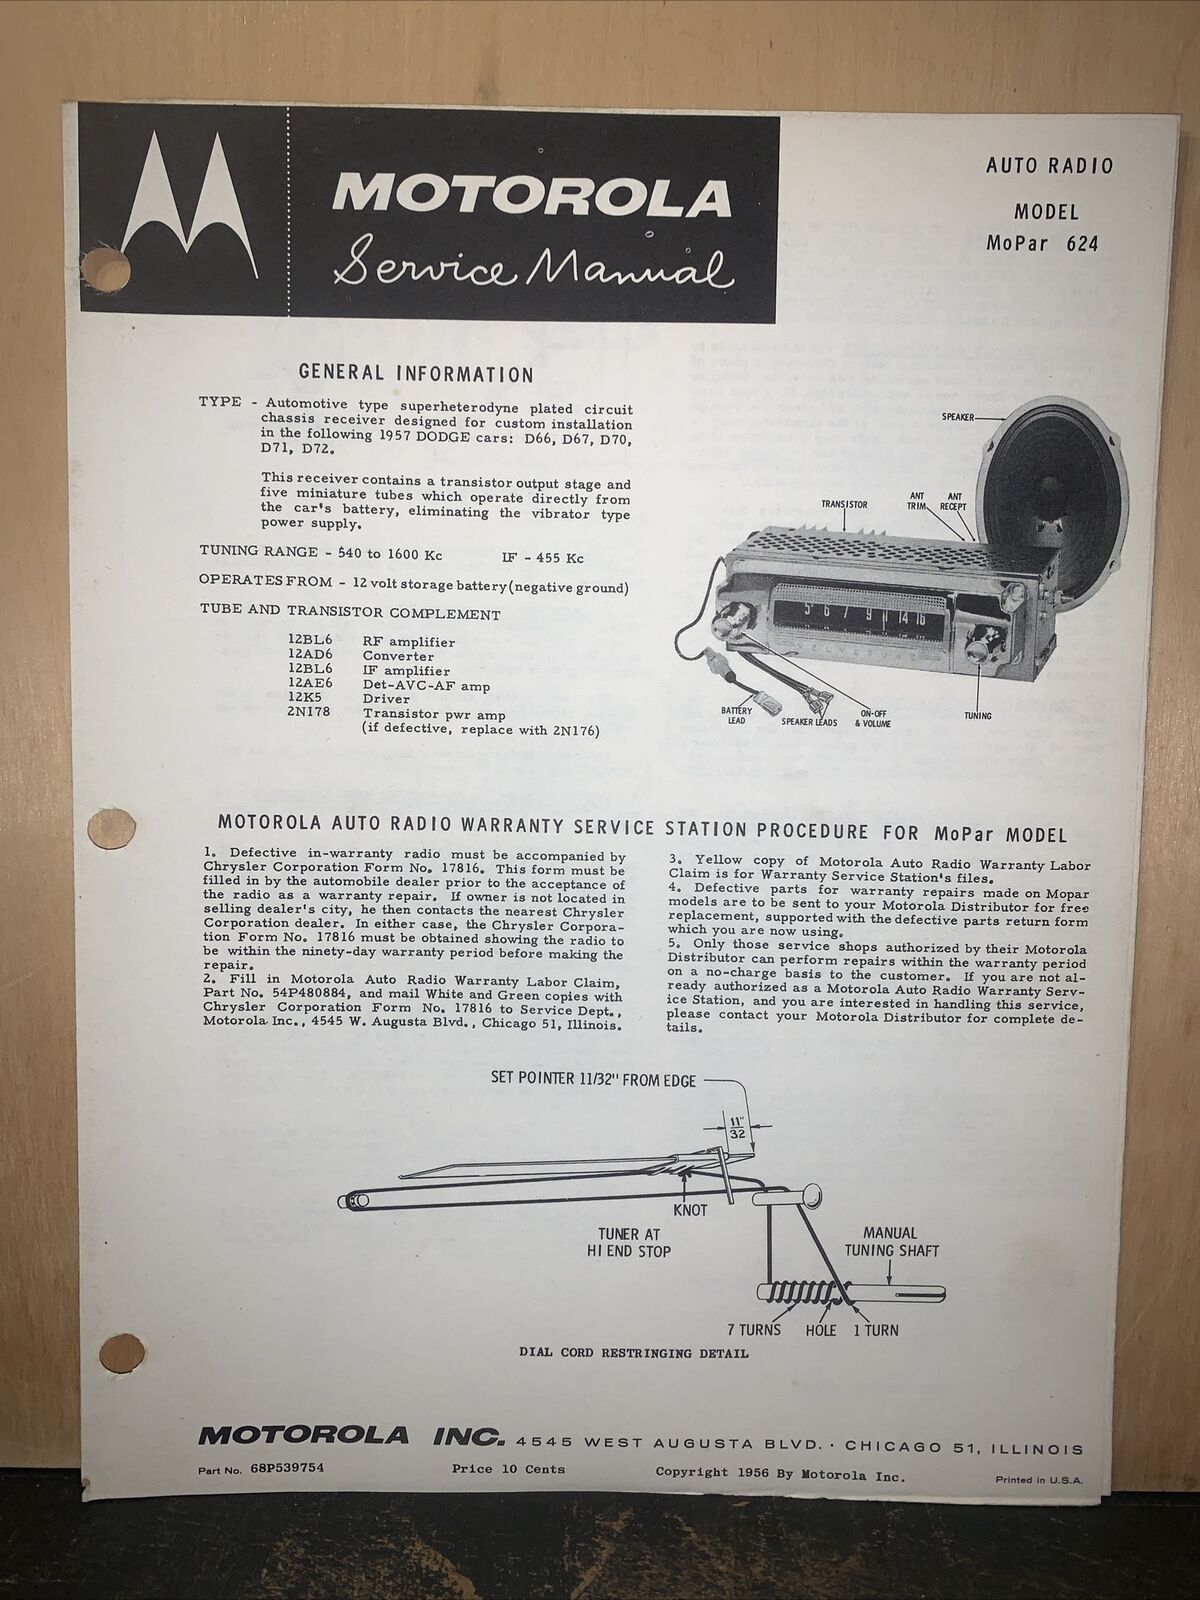 Motorola Radio -Service Manual- For 1957 Dodge Cars Schematics, Parts List.#624